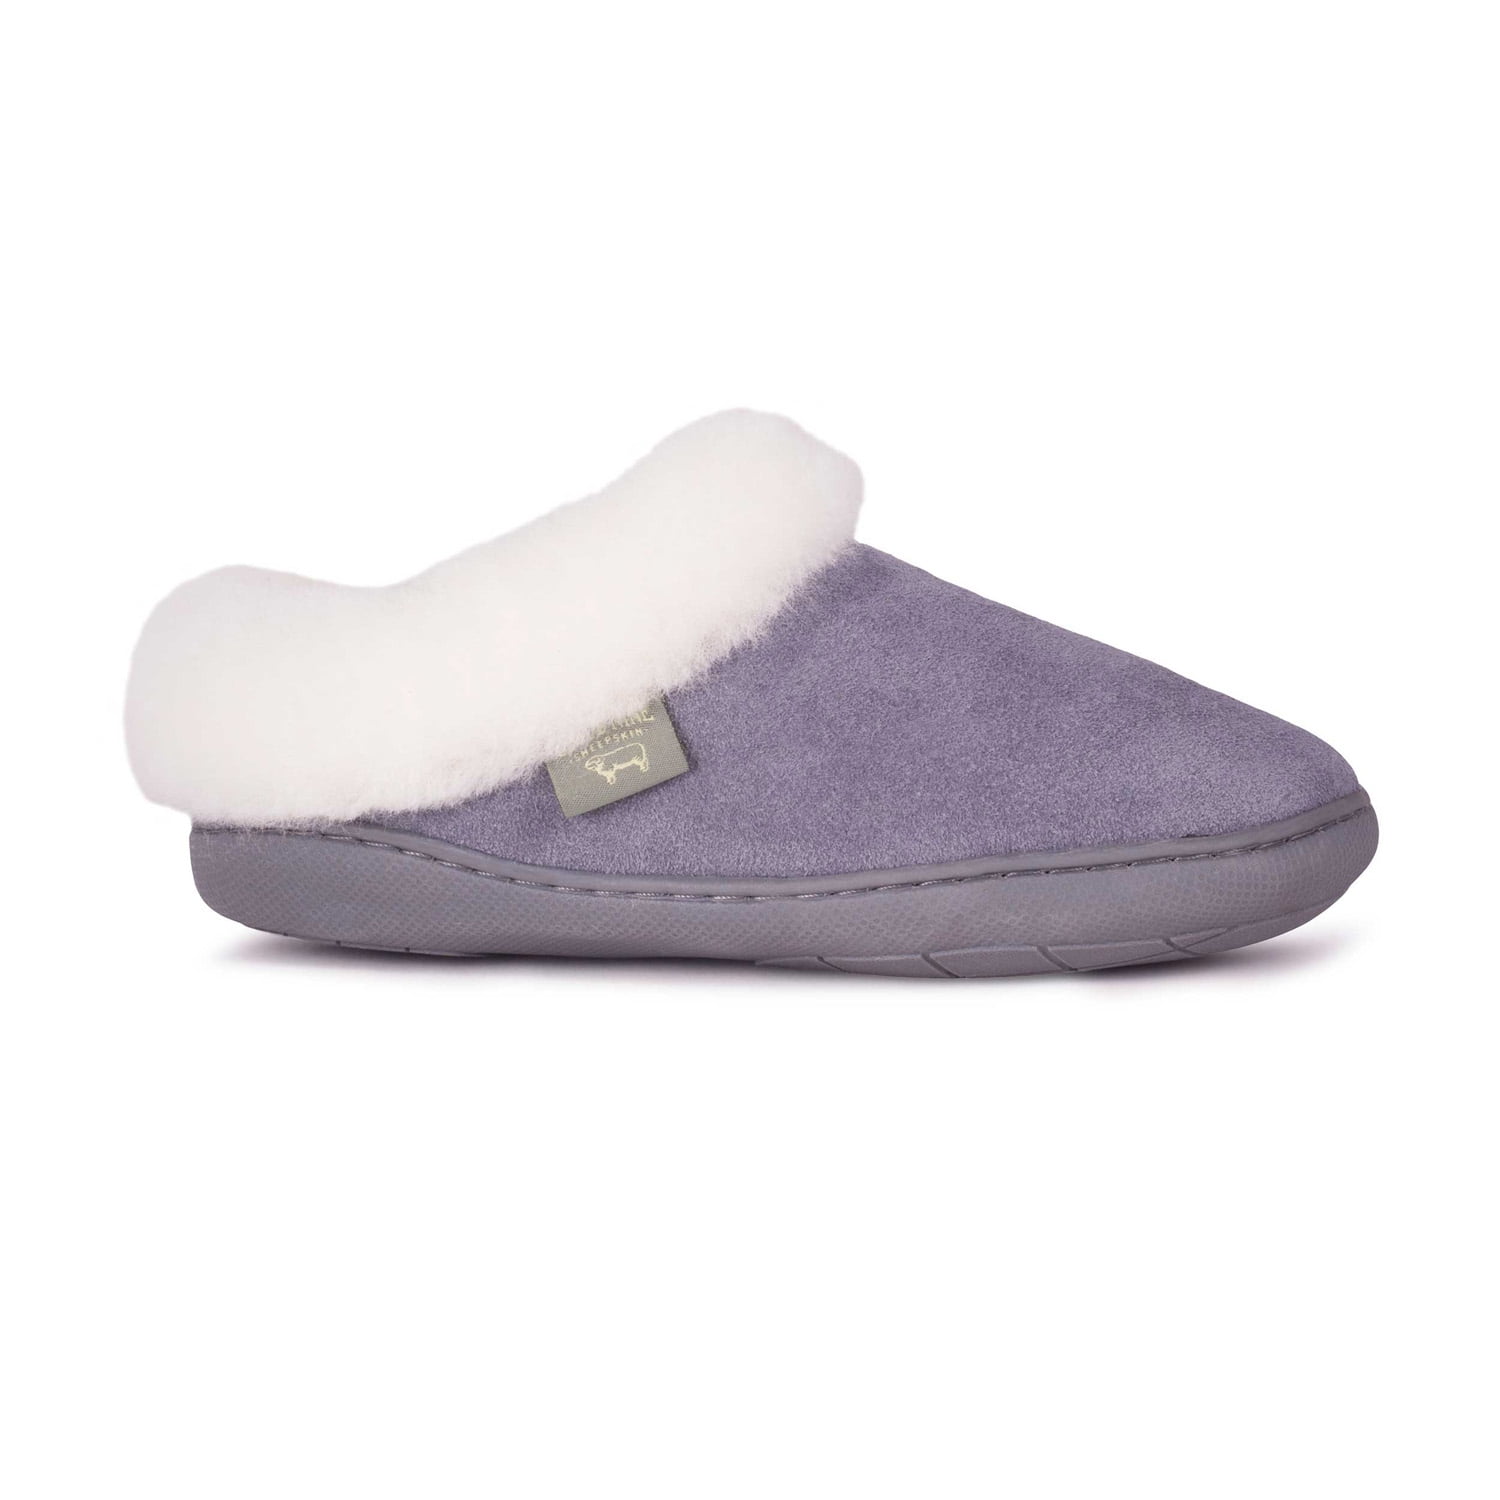 cloudnine sheepskin slippers